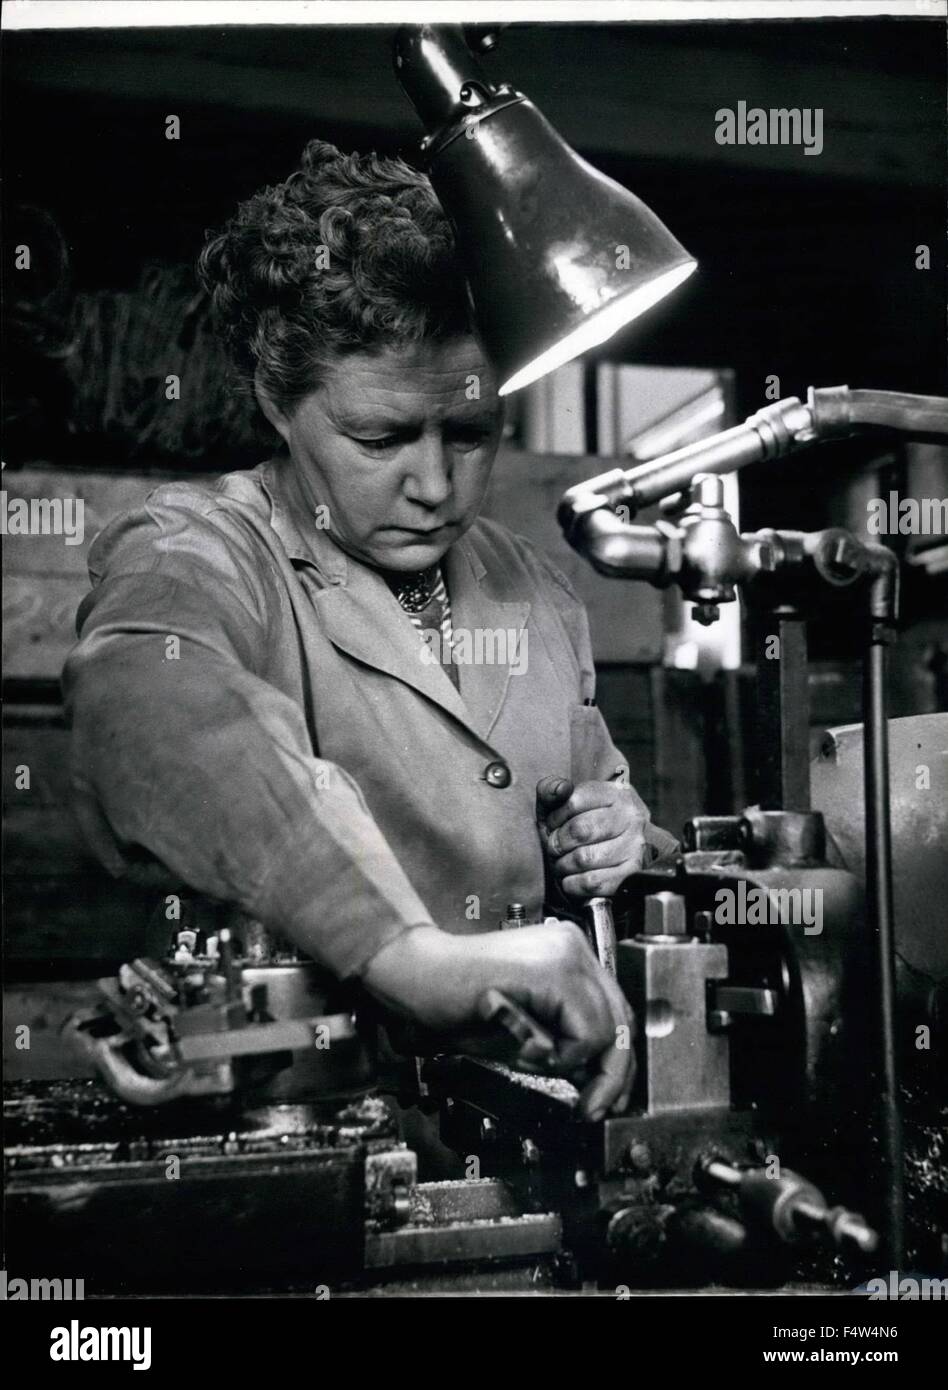 1962 - The Woman Engineer: Ruth Farris sets her Jigs: Miss Ruth Farris ...